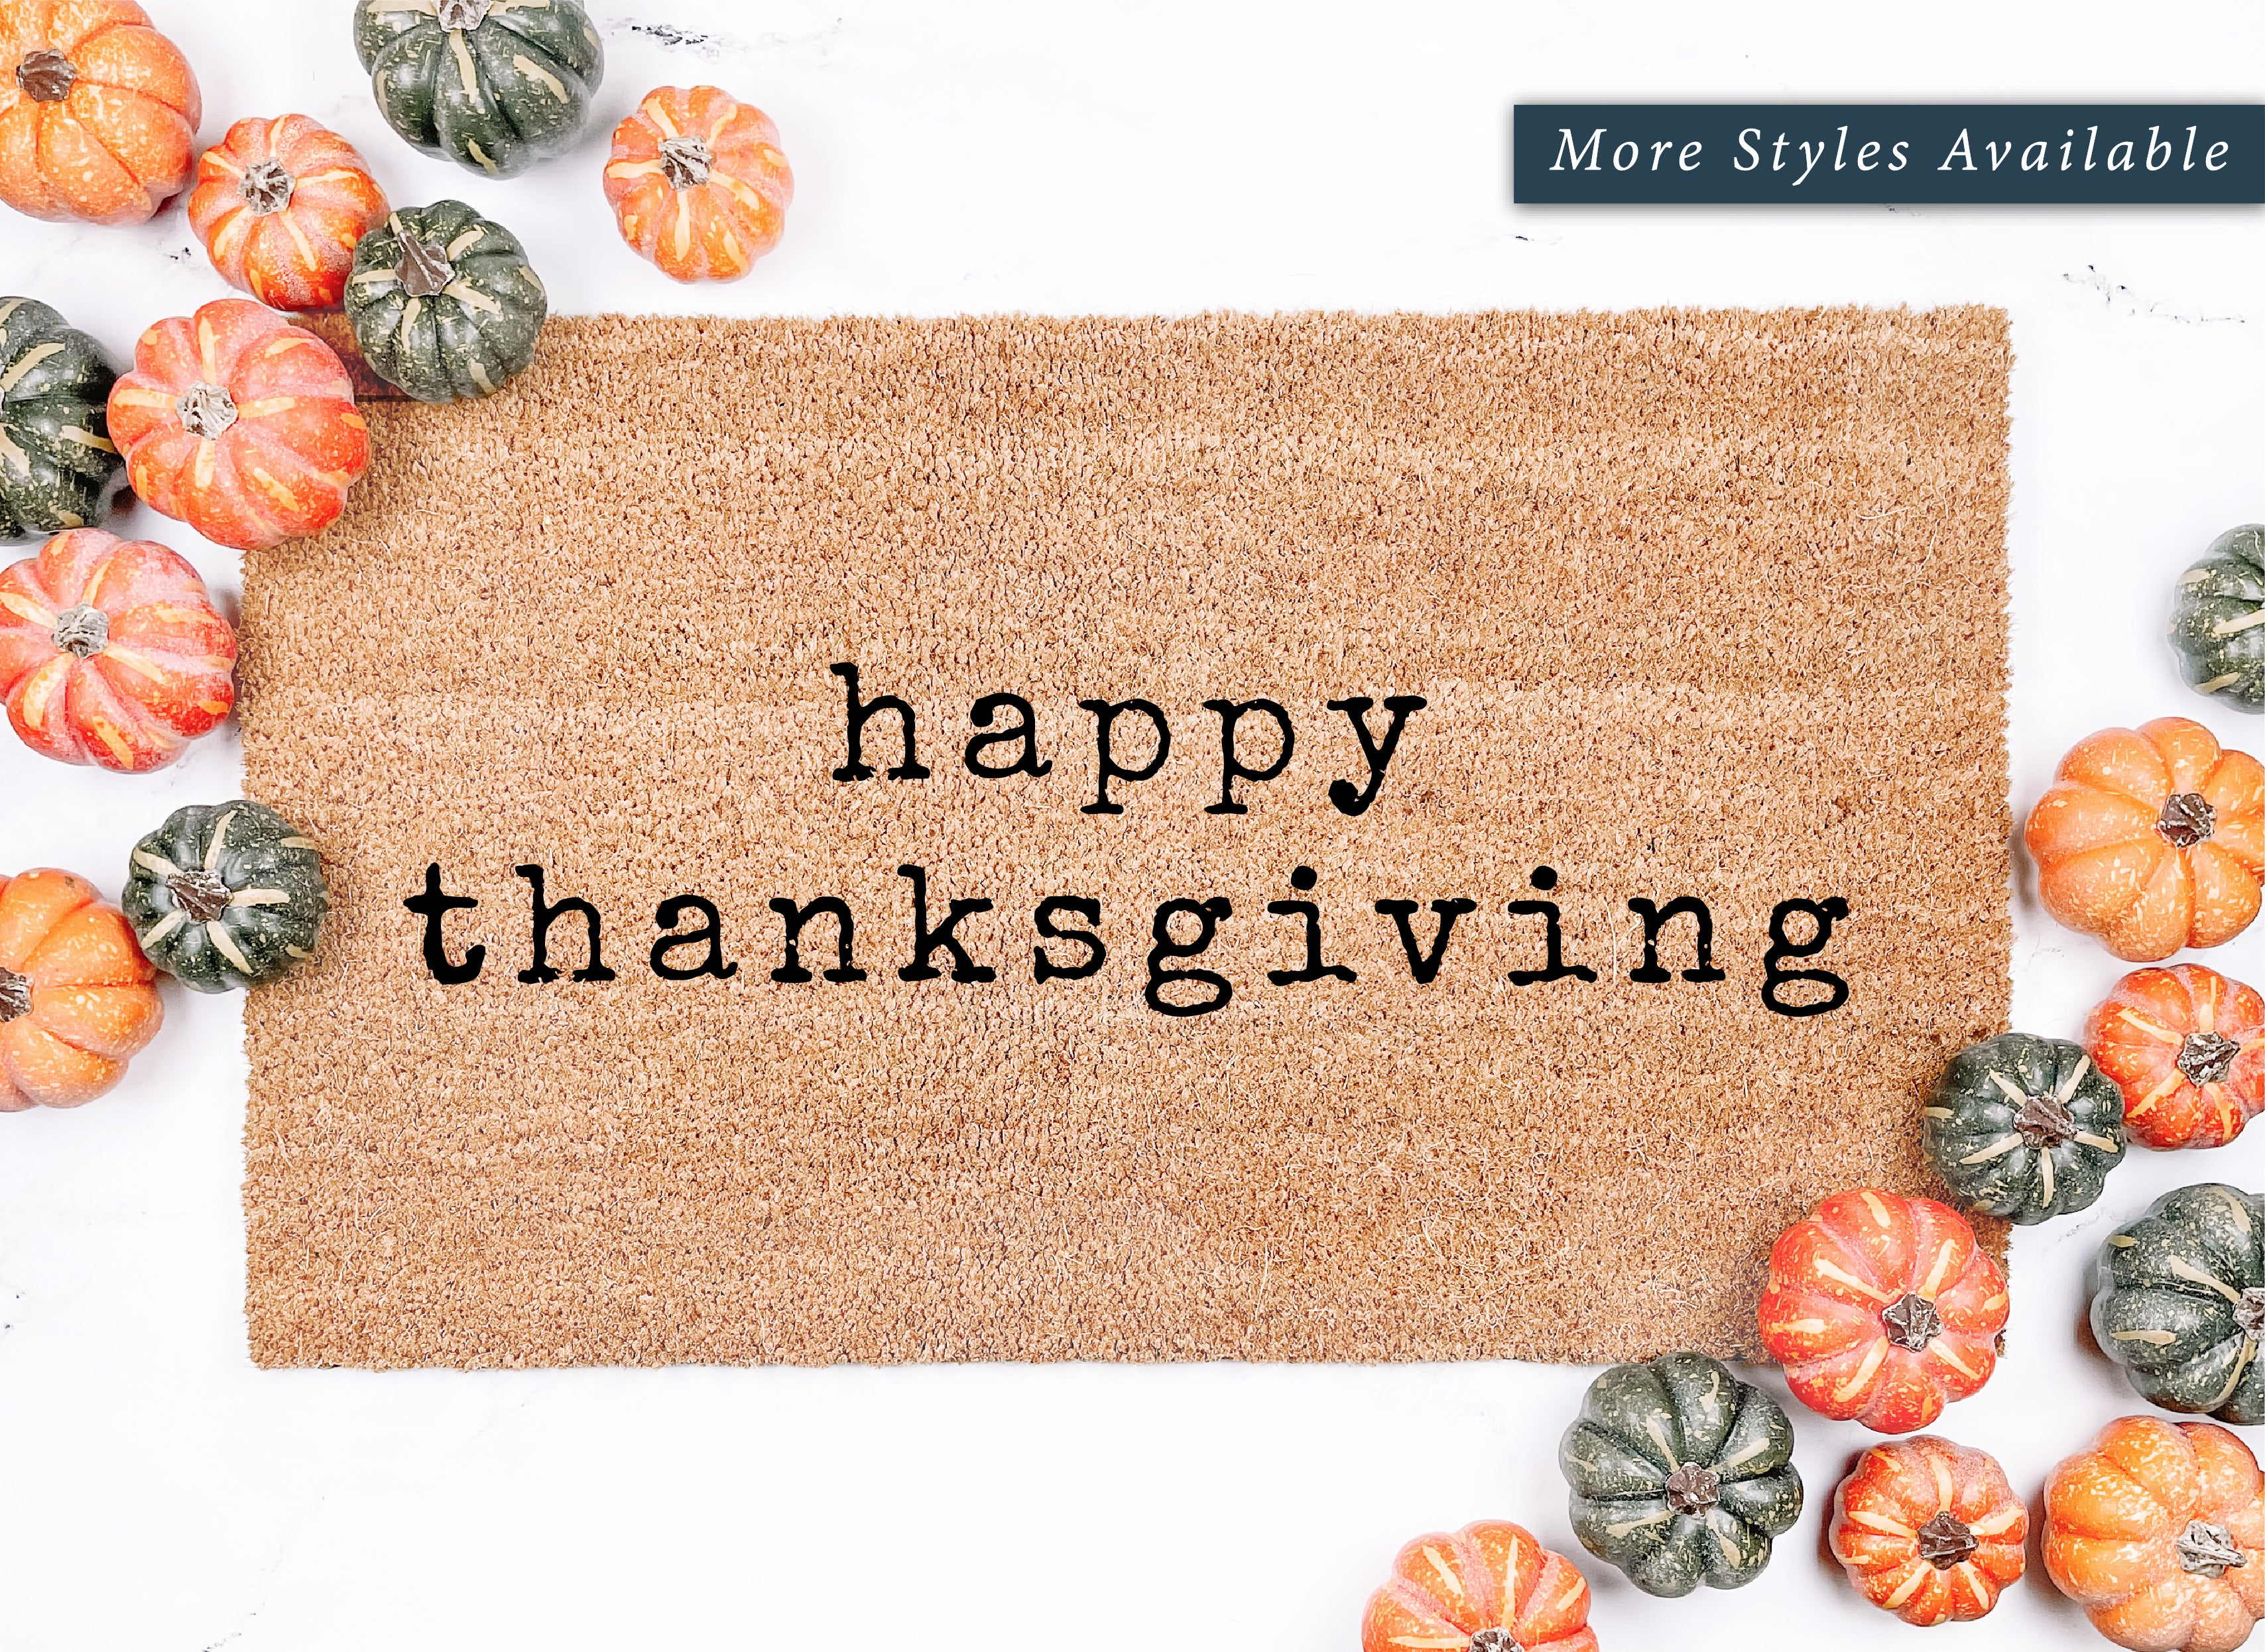 Happy Thanksgiving v2 (lowercase) Doormat